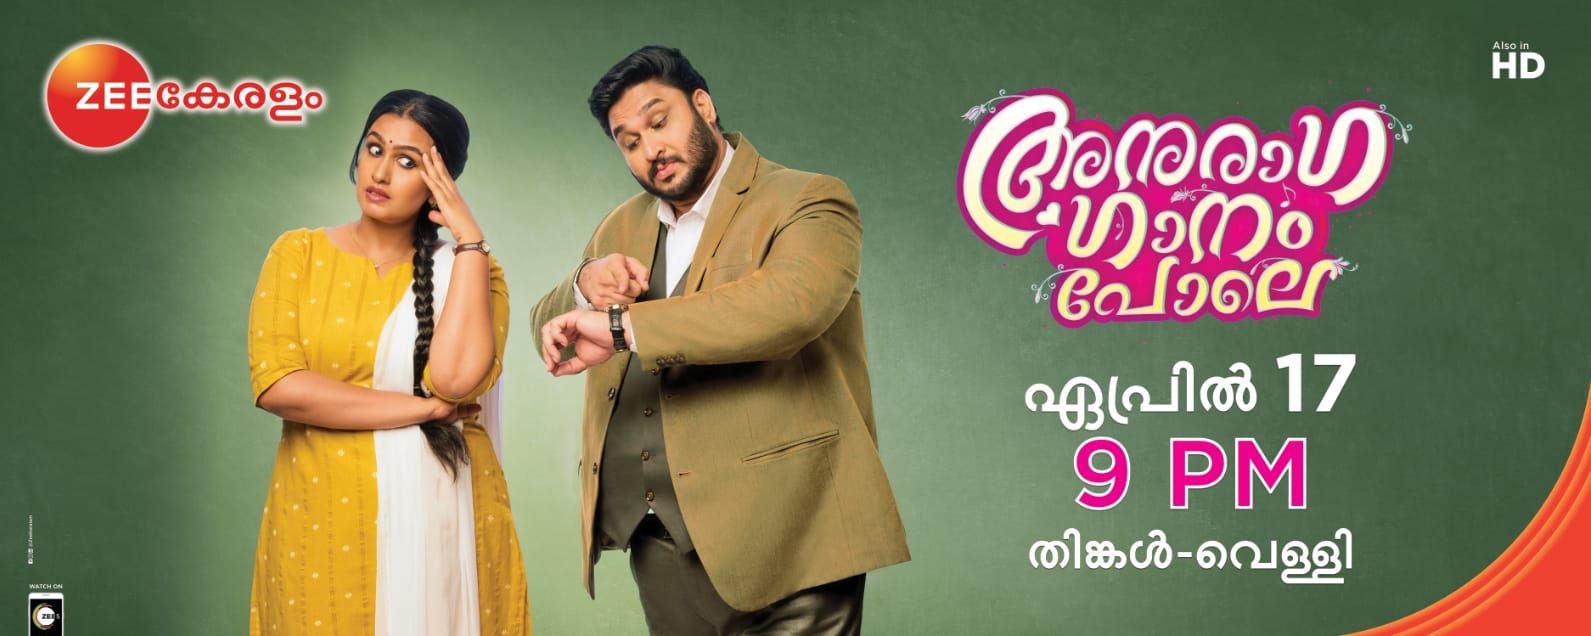 Shyamambaram Serial Zee Keralam Starring Haritha G Nair, Rahul Ramachandran in Lead 5